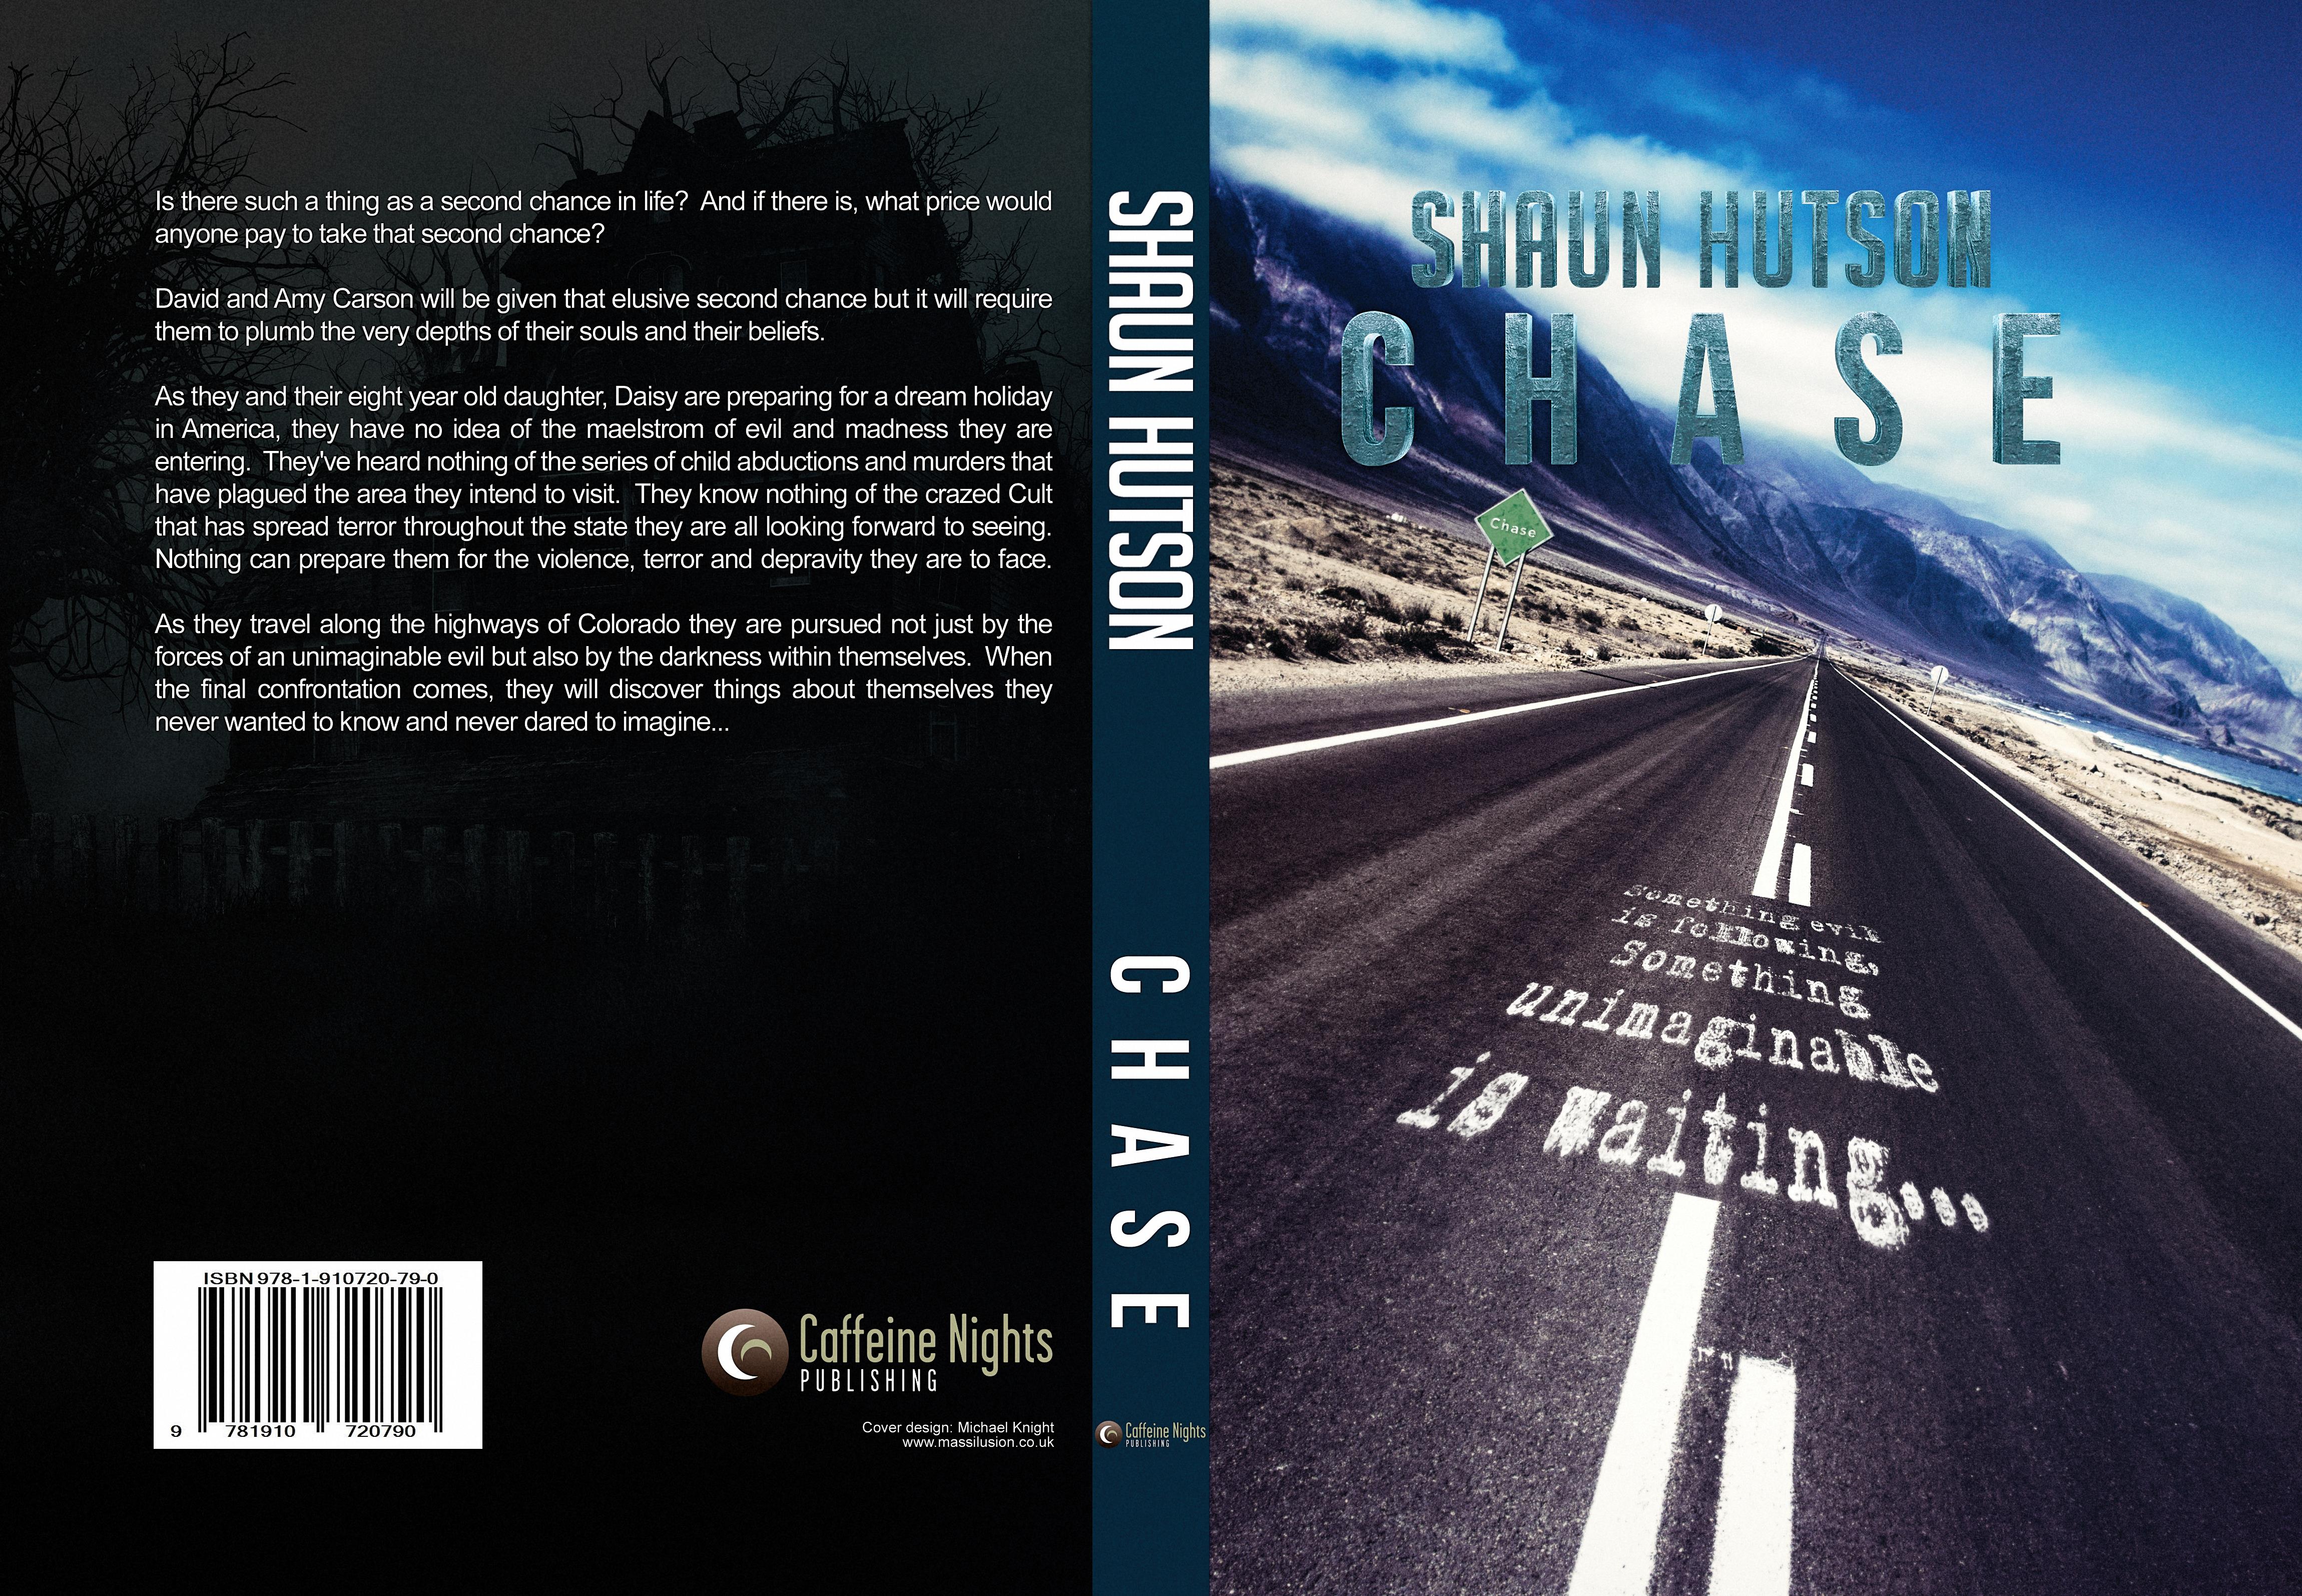 Chase by Horror Novelist, Shaun hutson